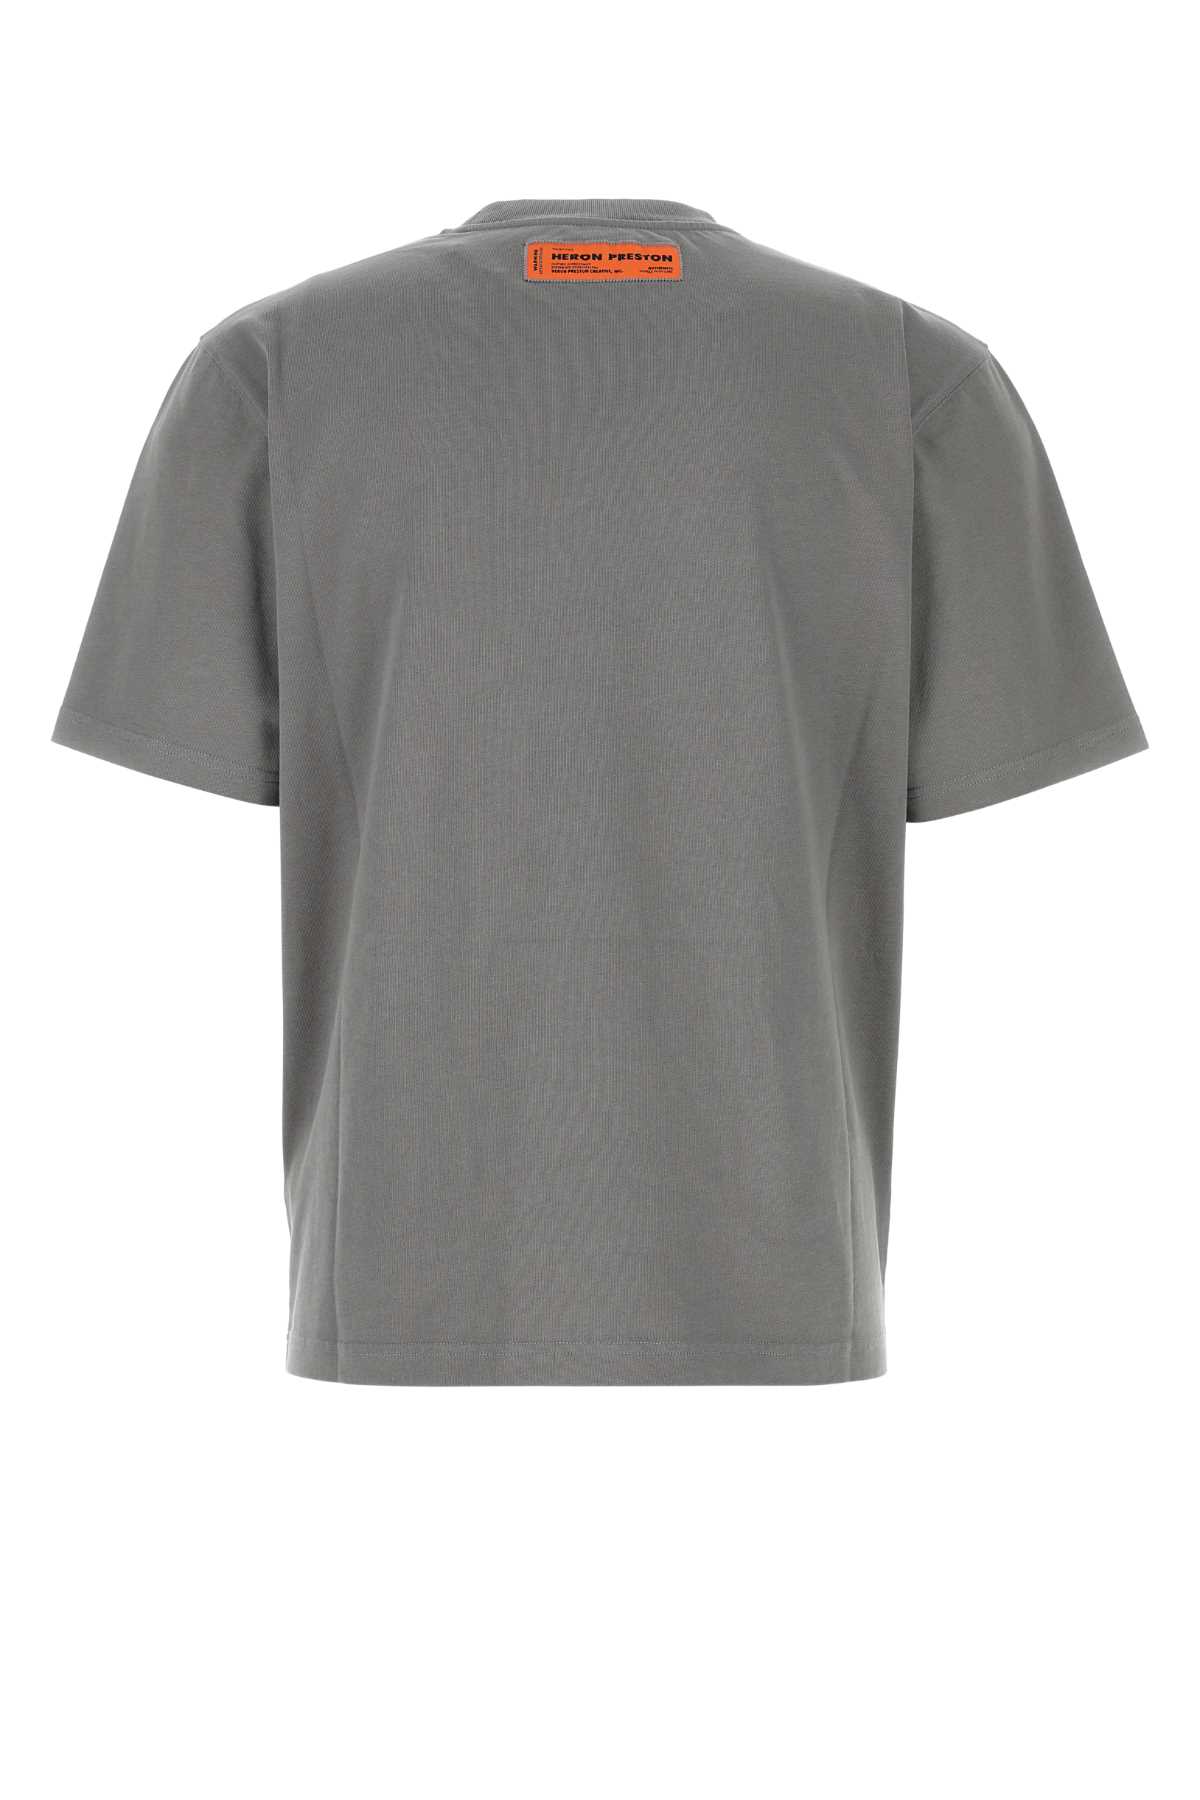 Heron Preston Grey Cotton Oversize T-shirt In Greywhite